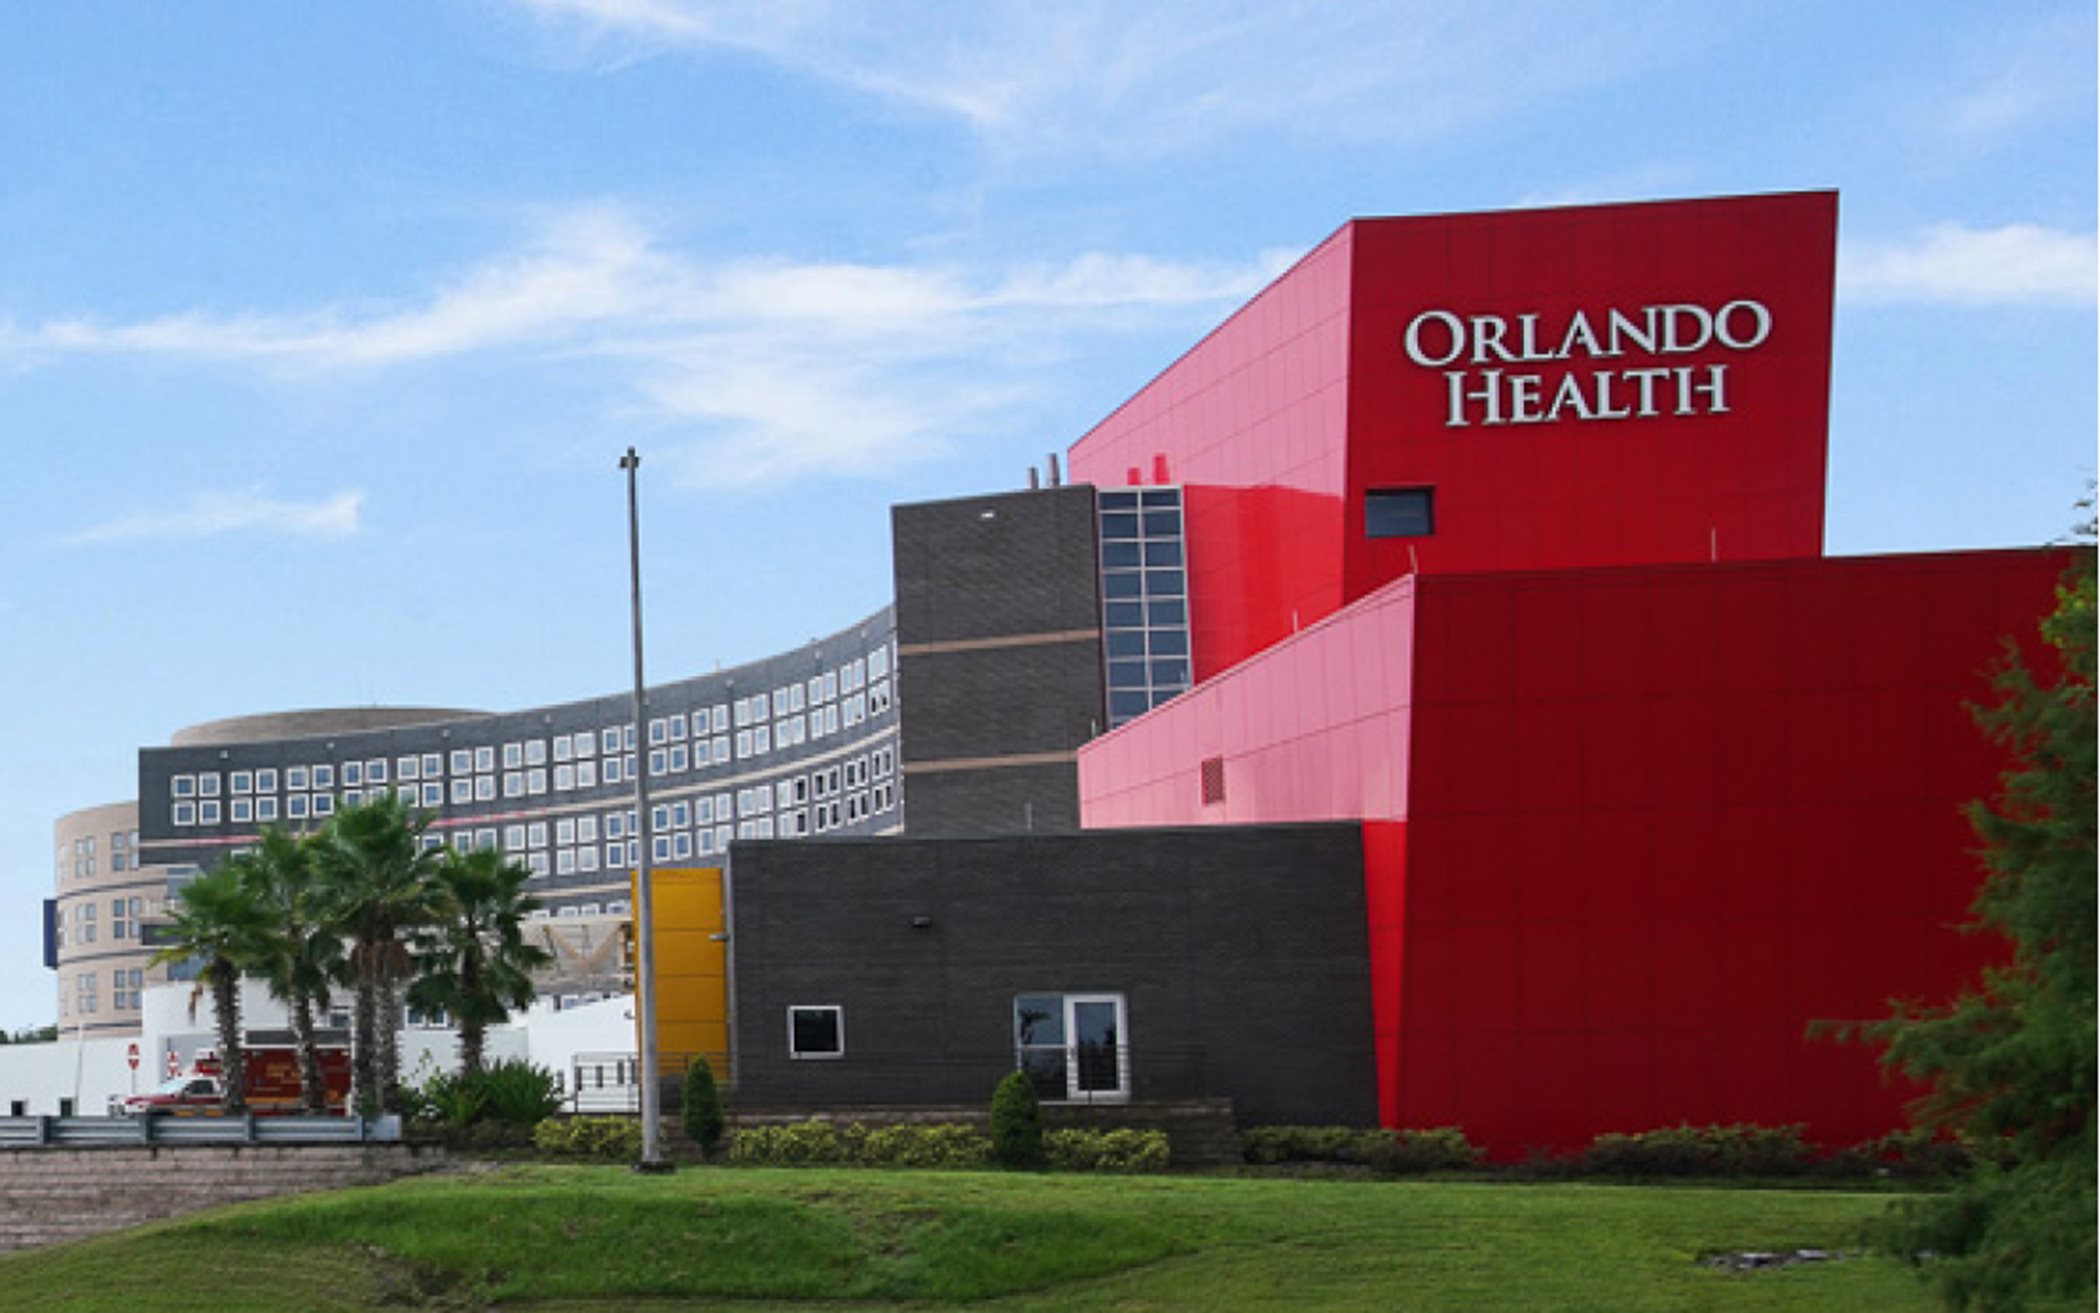 state-of-the-art Orlando Health hospital